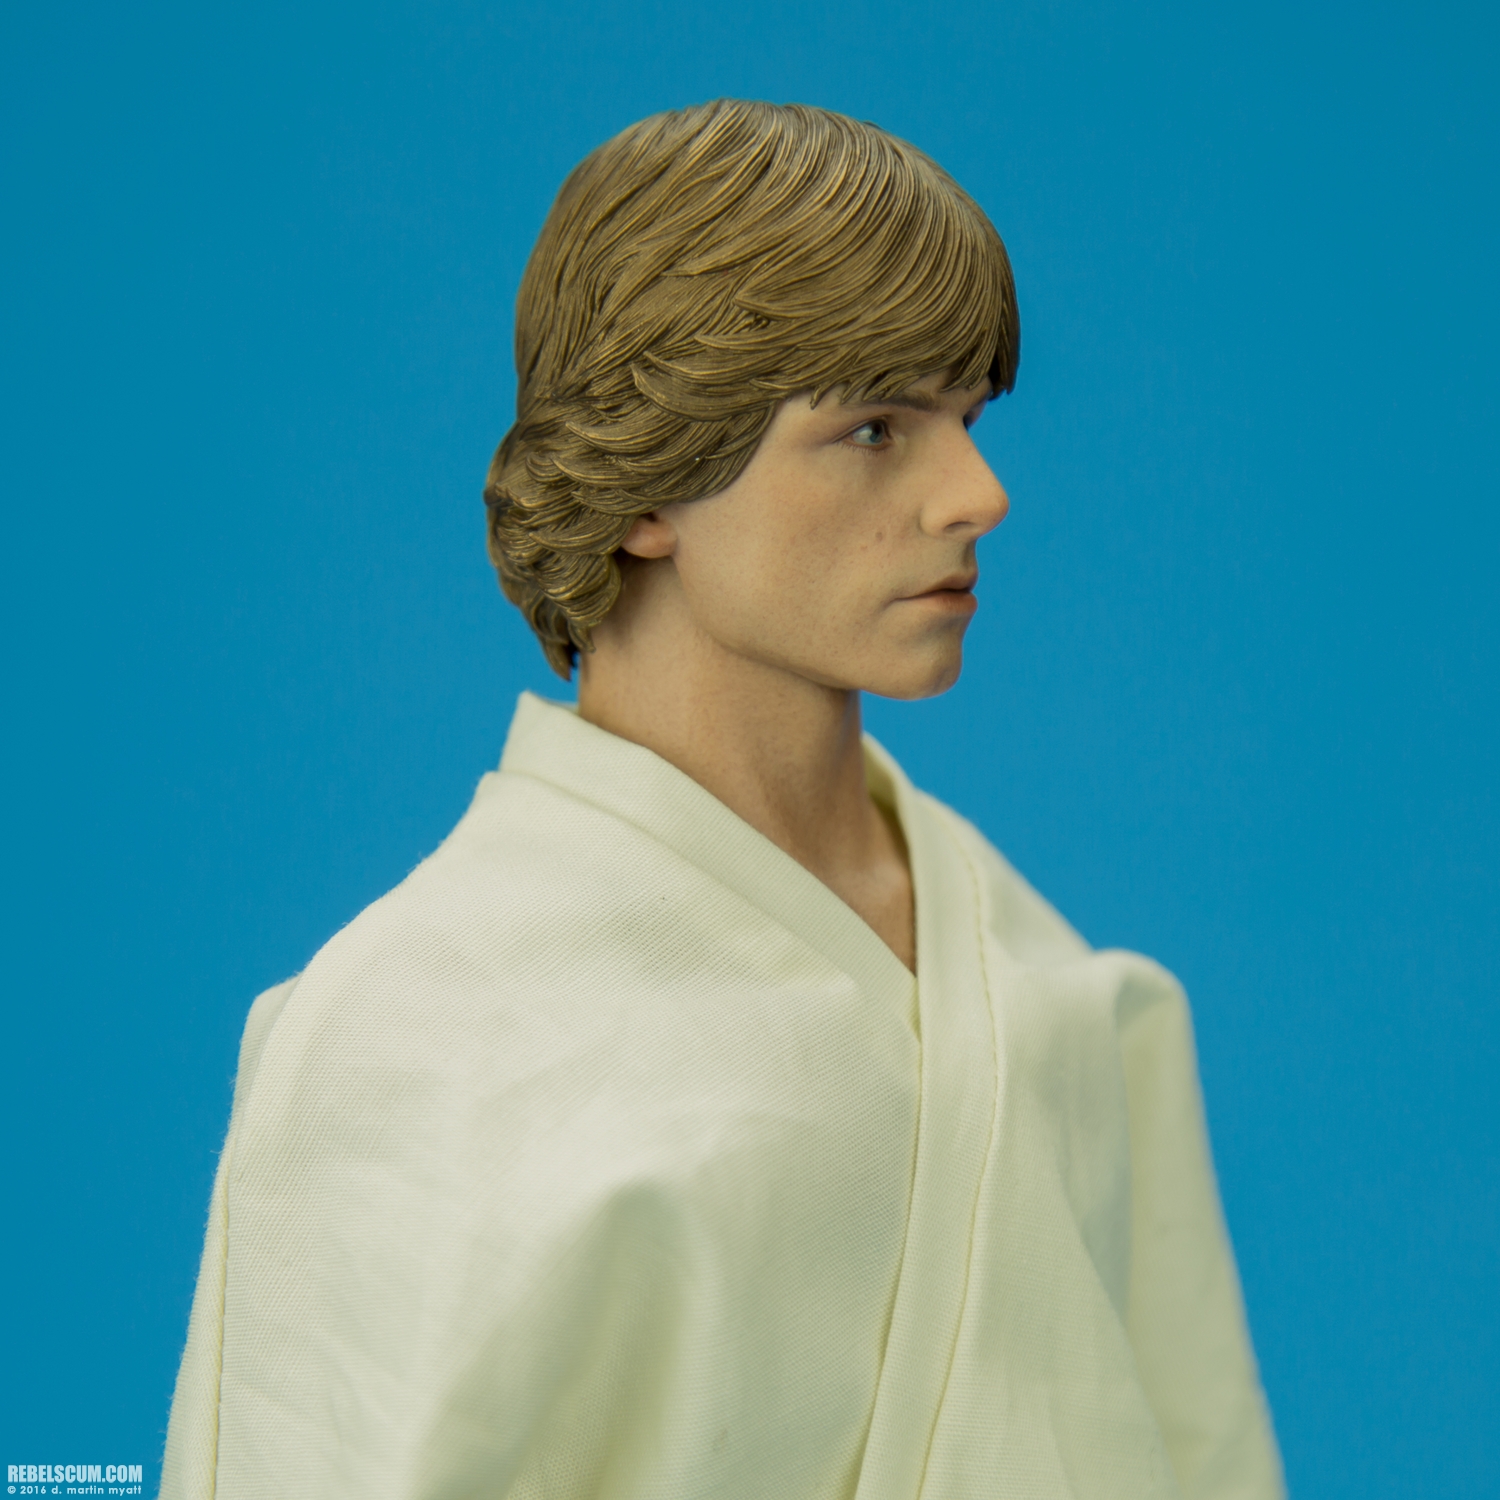 Luke-Skywalker-MMS297-Hot-Toys-Star-Wars-A-New-Hope-022.jpg